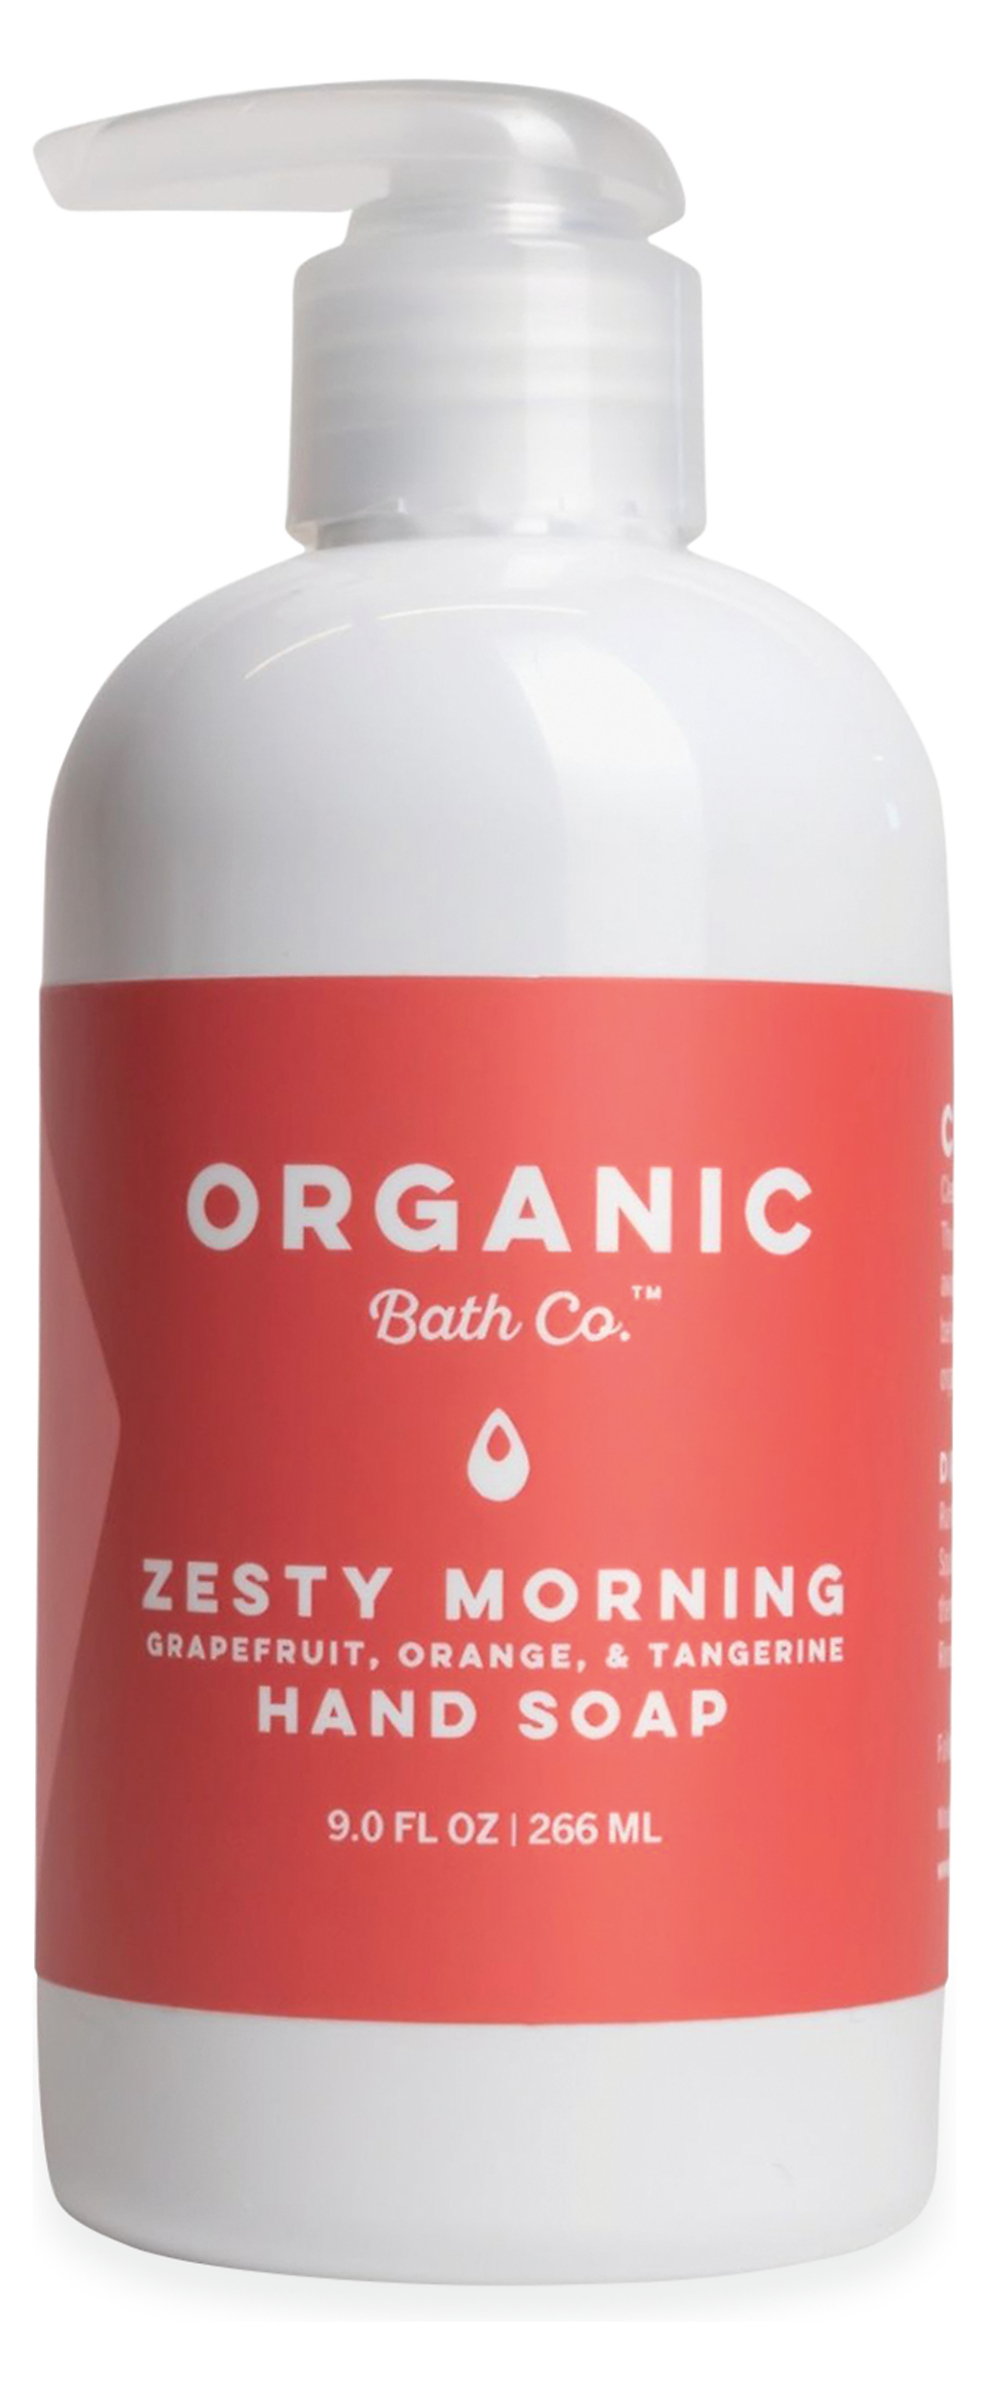 Organic Bath Company - Hand Soap in Zesty Morning